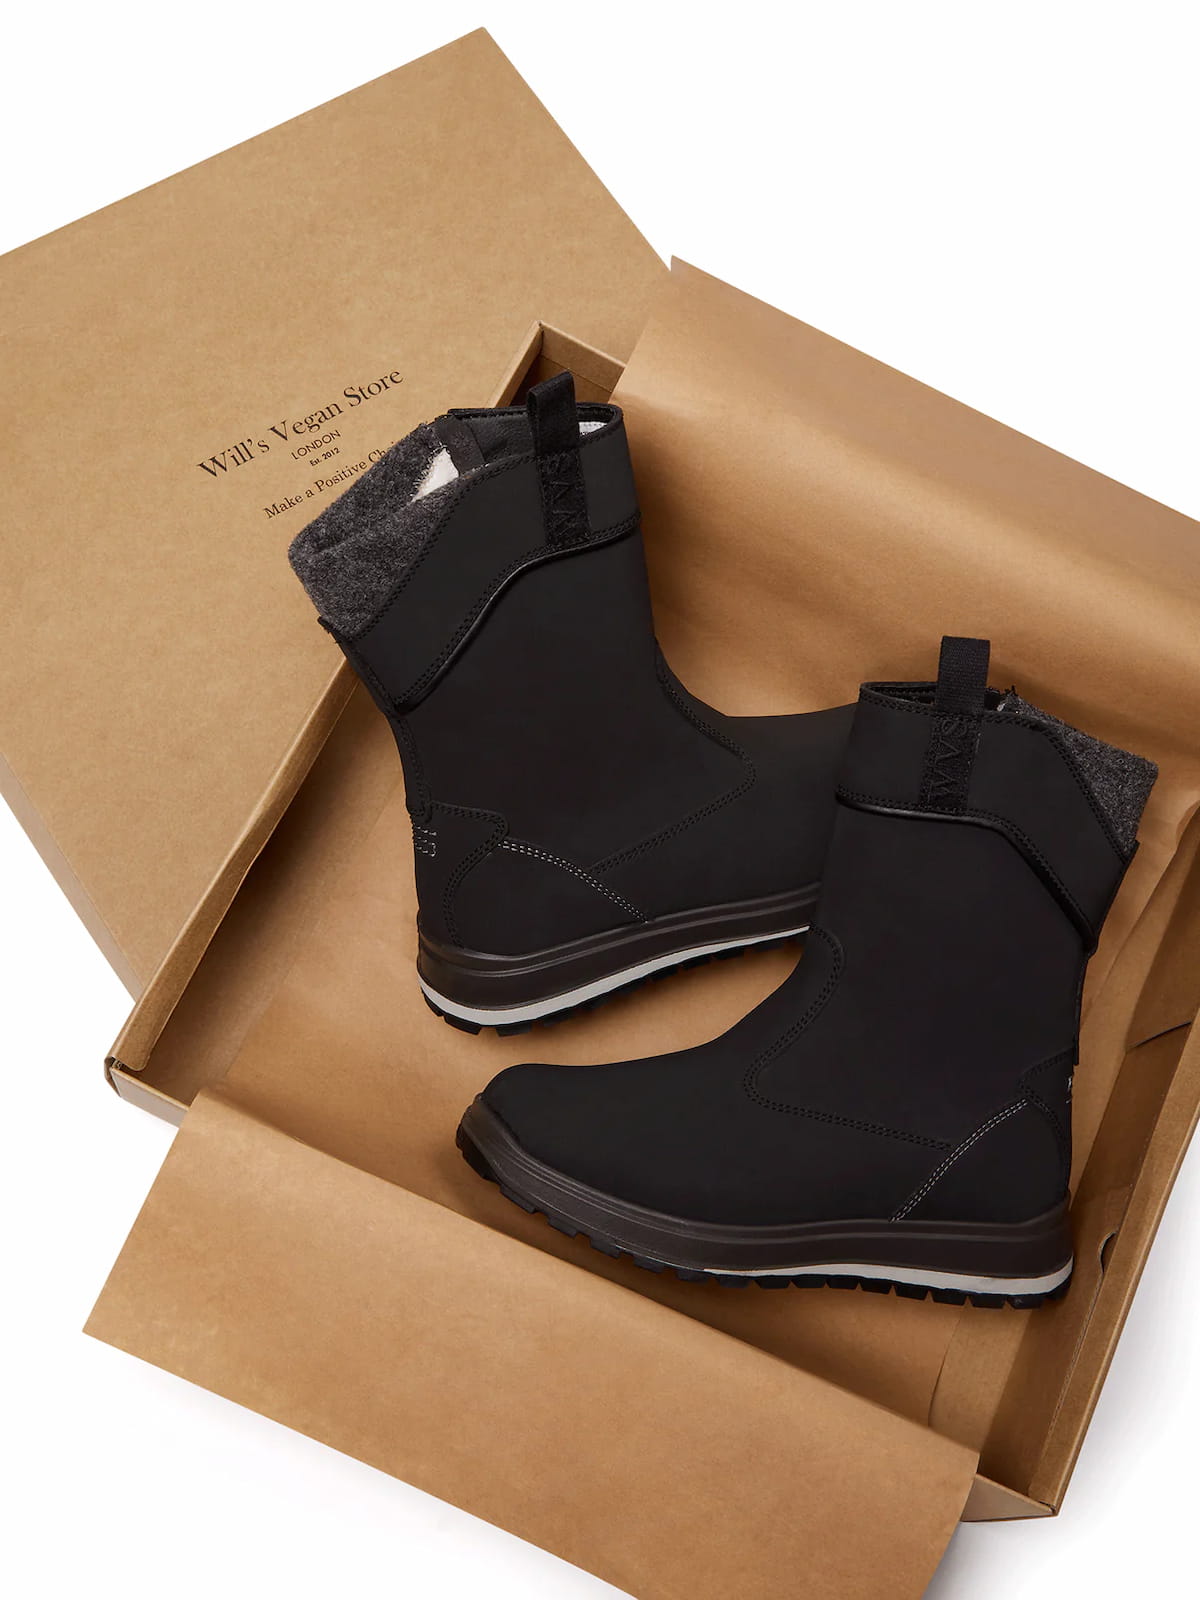 Black Ugg-style vegan boots in a cardboard box.